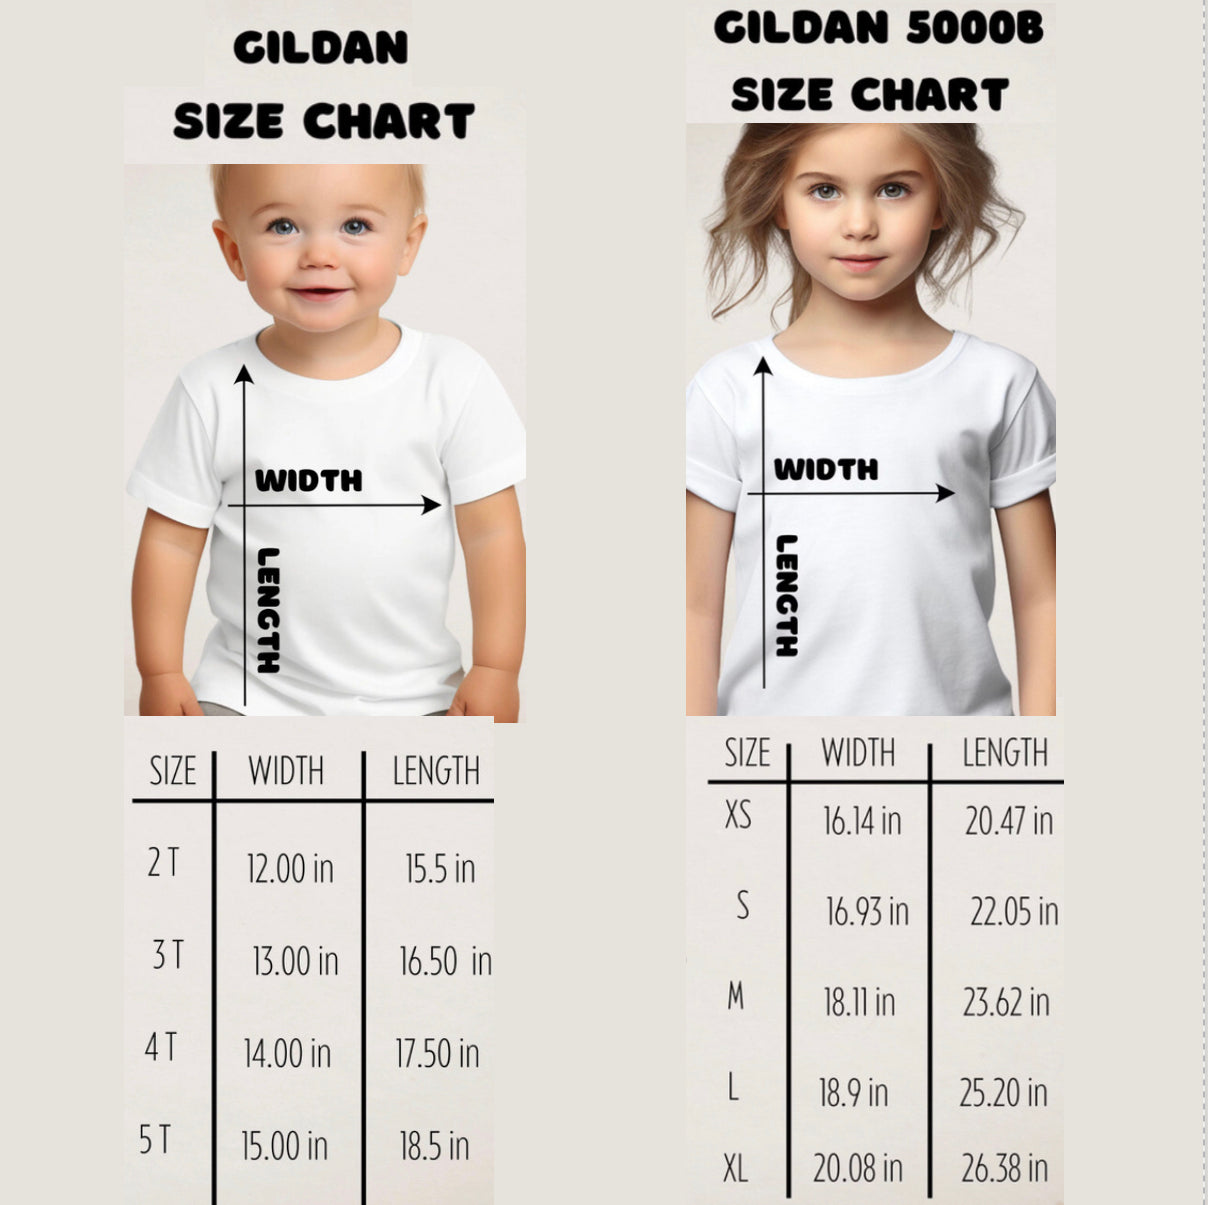 Swift inspired t-shirt | Kids t-shirt | A lot going on a the moment